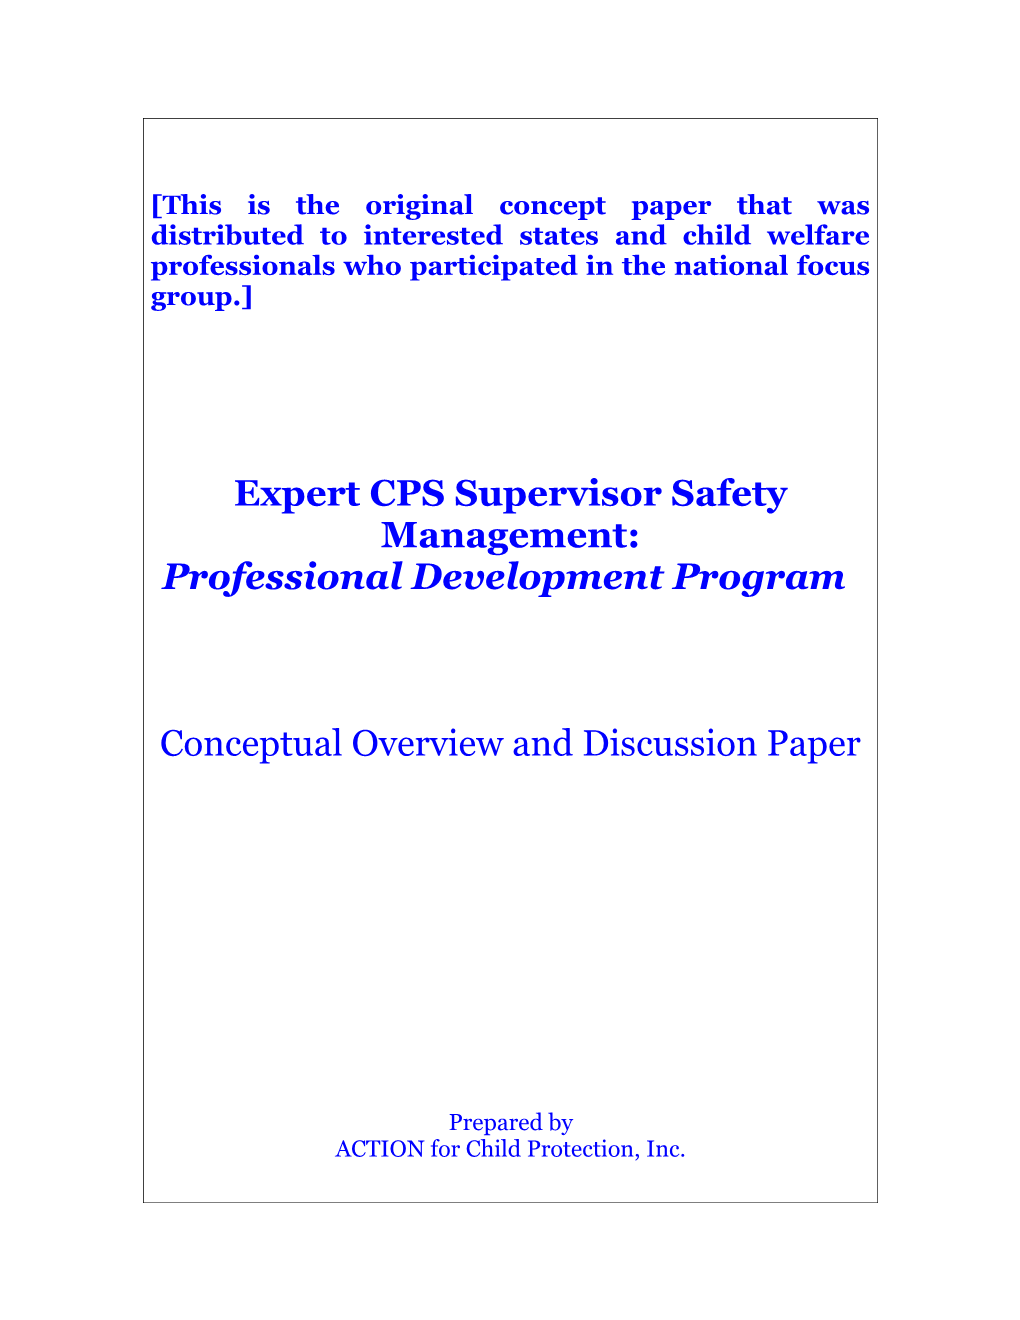 Expert CPS Supervisor Safety Management